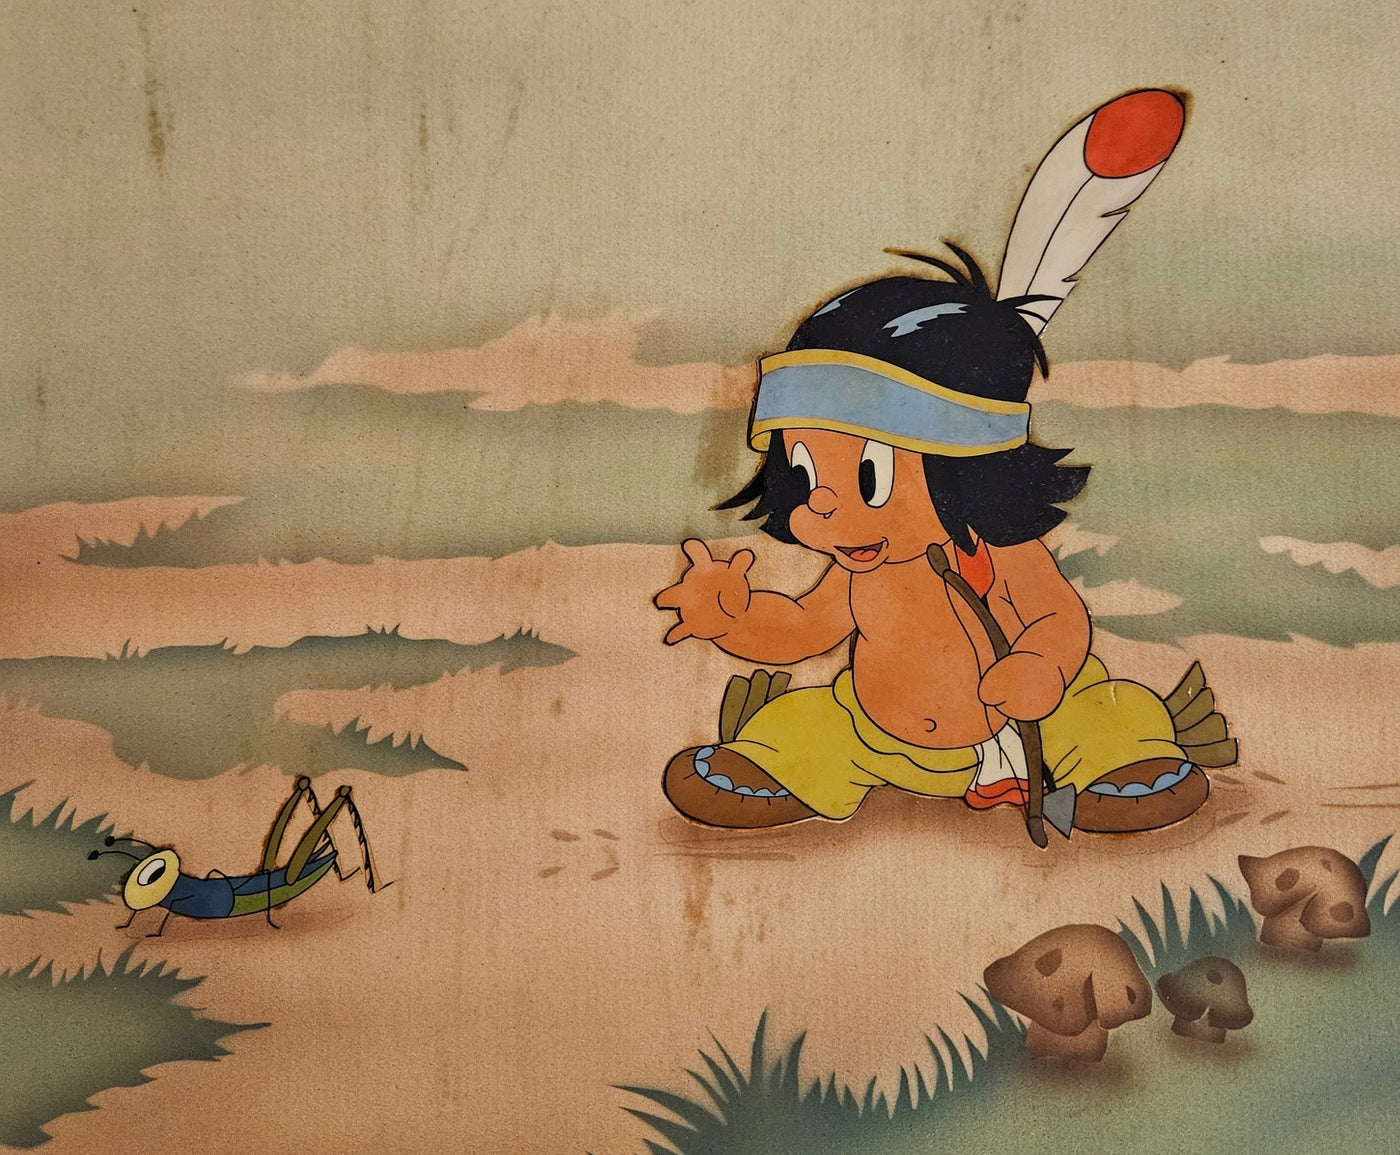 Original Walt Disney Production Cel on Courvoisier Background from Little Hiawatha